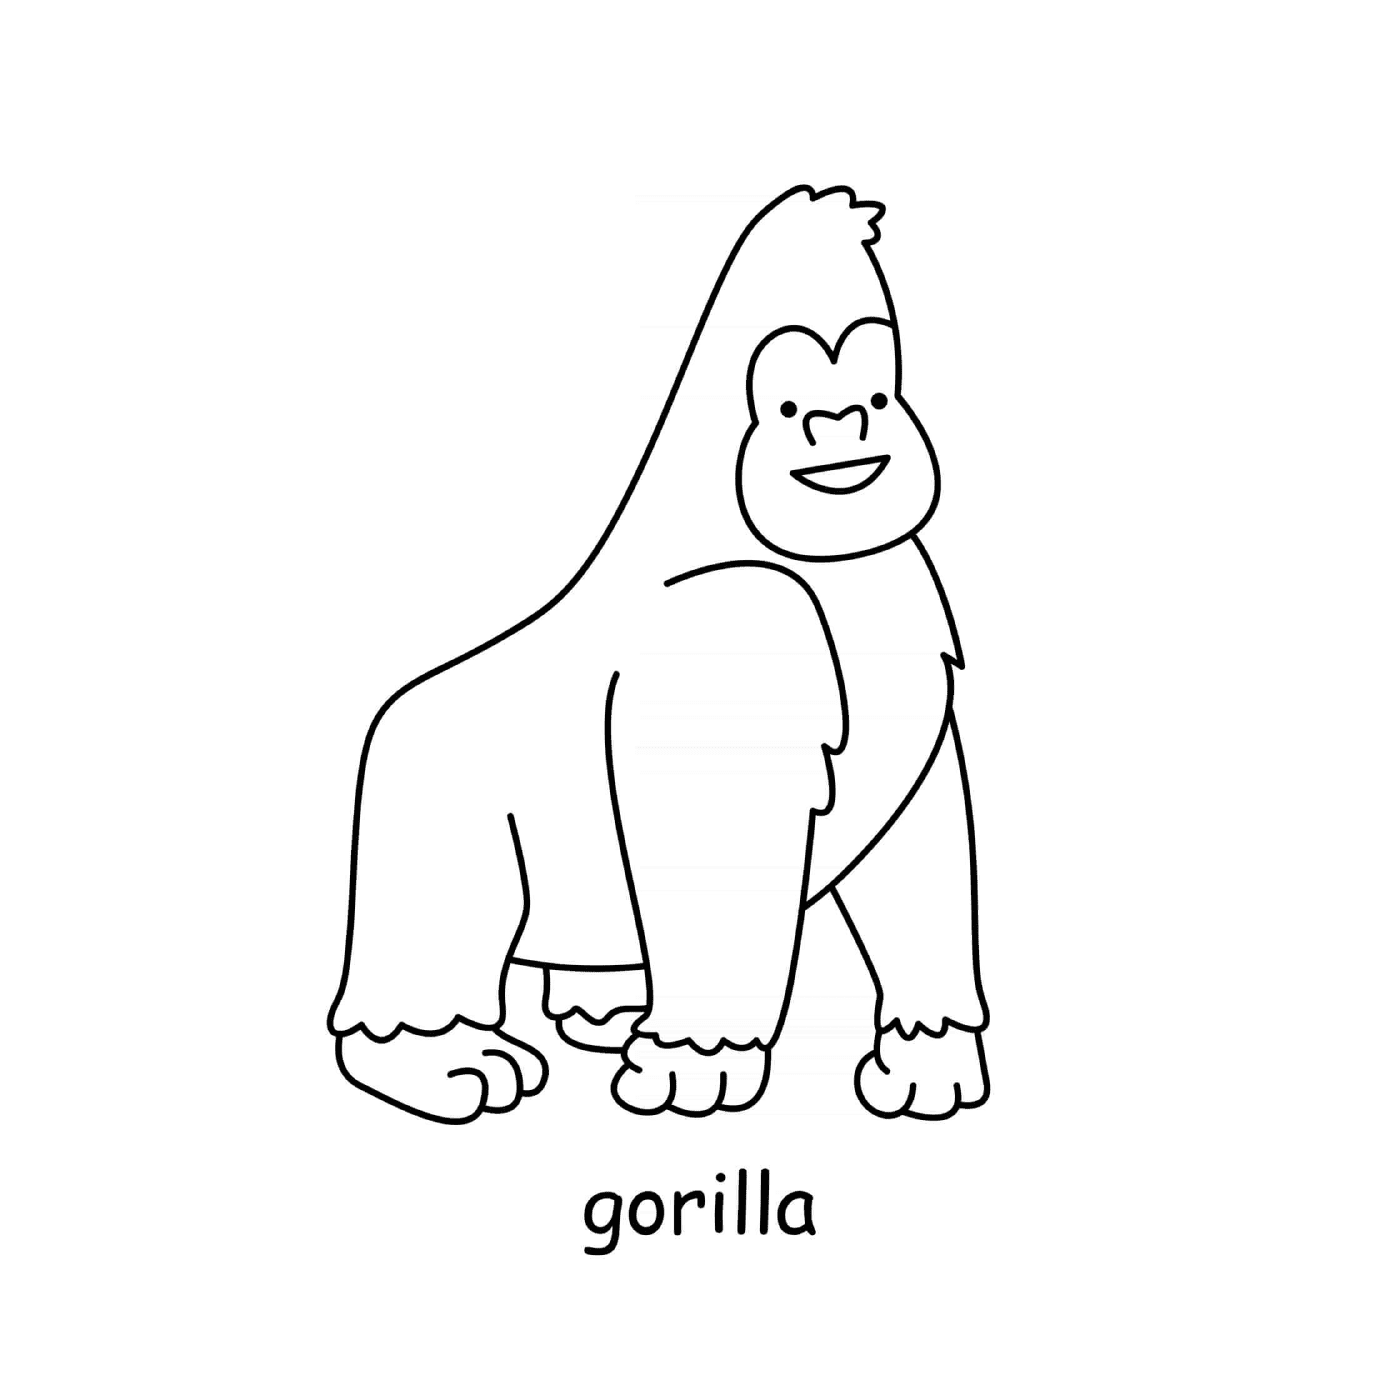  Animal gorilla 